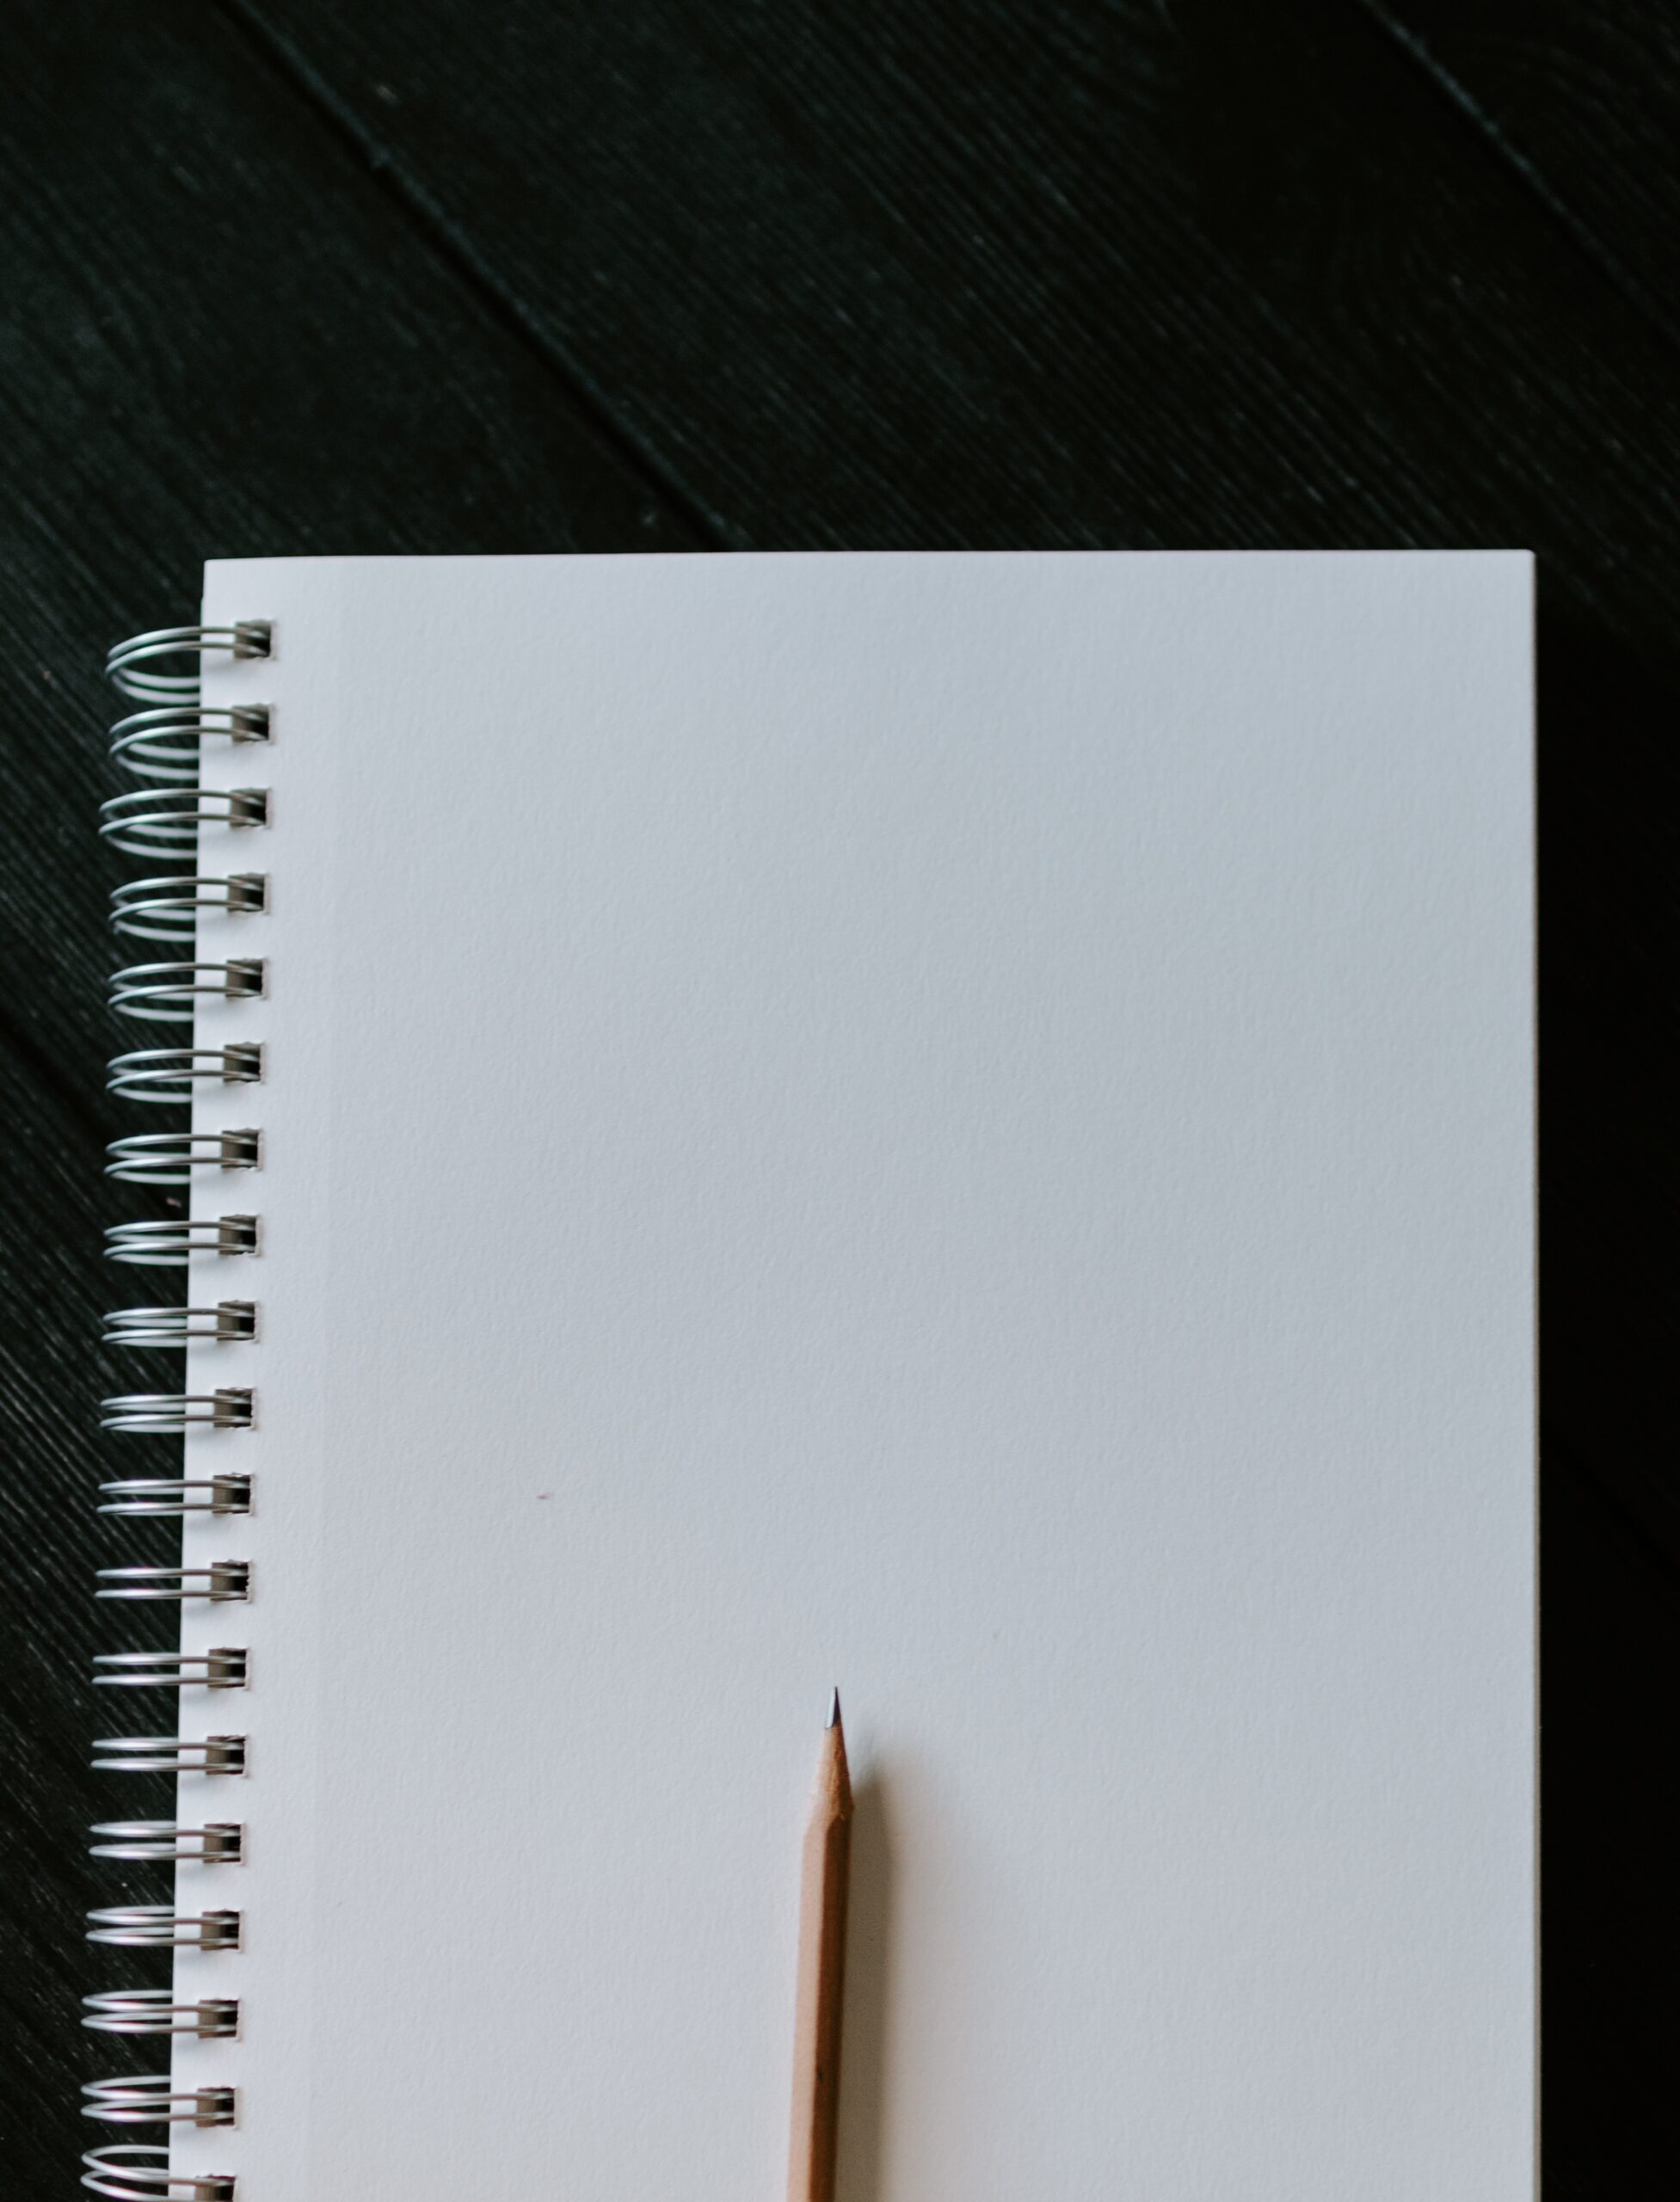 Wooden pencil on blank spiral notebook (Credit: Kelly Sikkema, Unsplash)